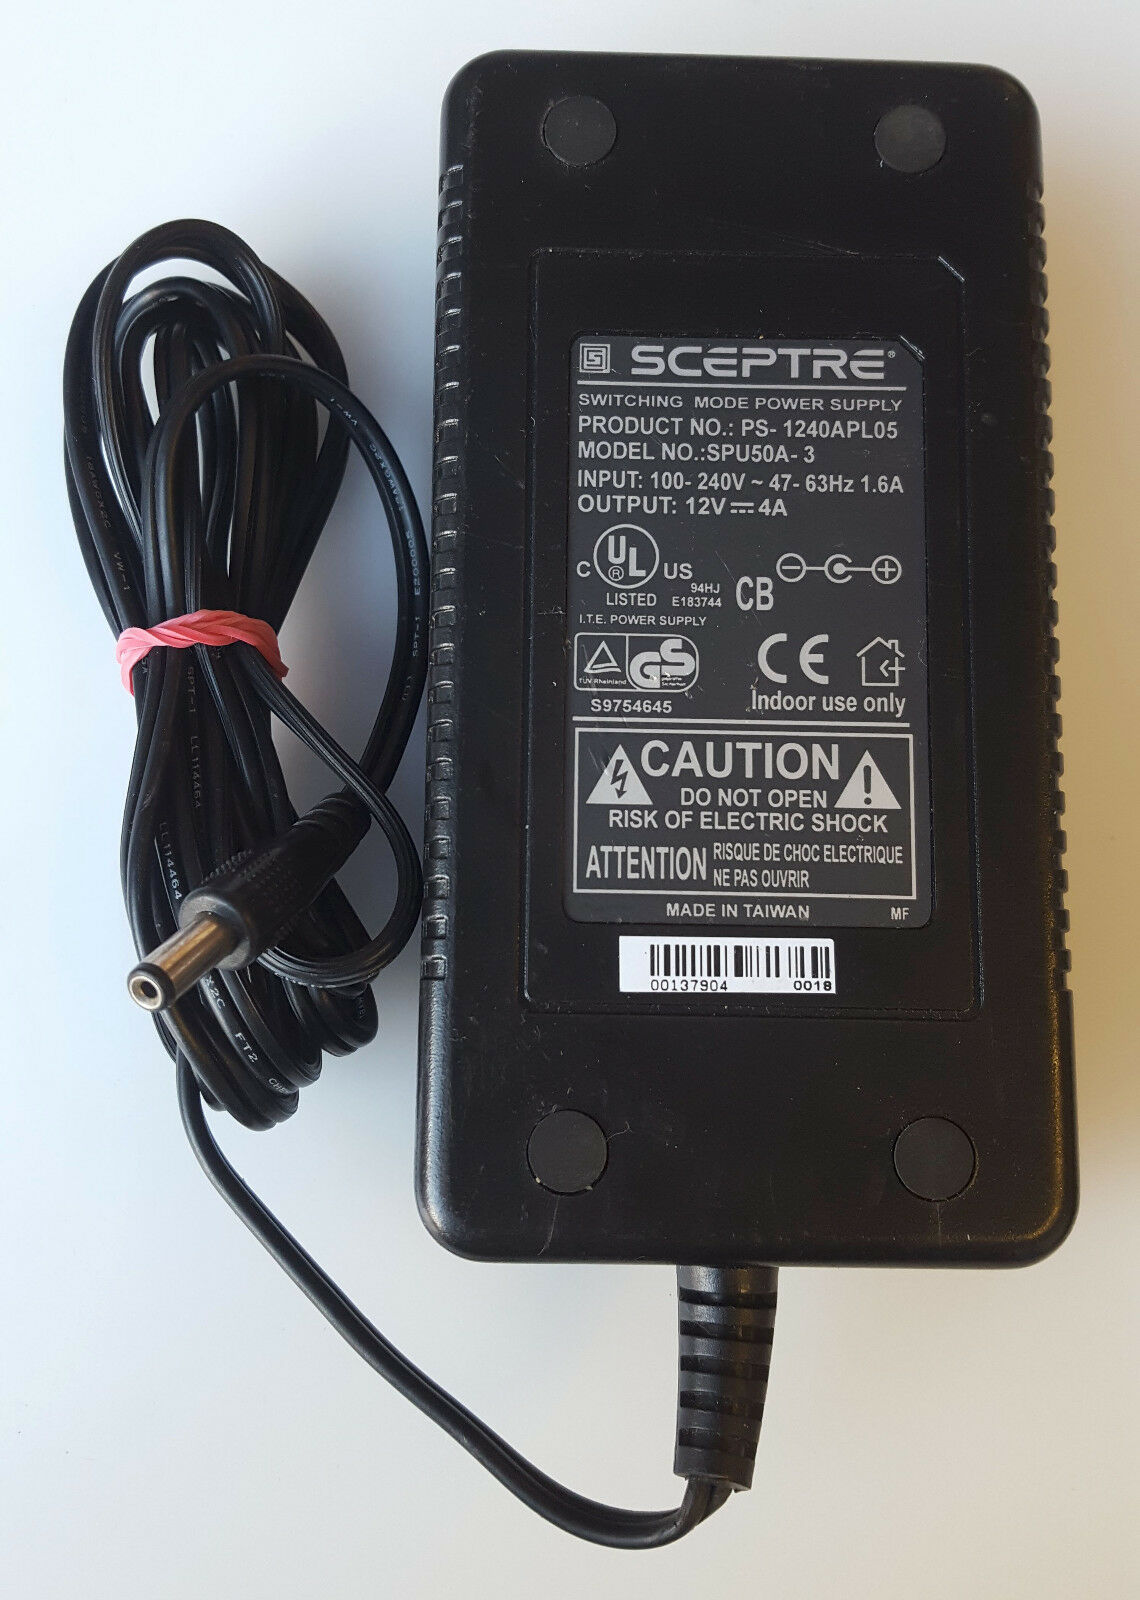 New SCEPTRE SPU50A-3 12V 4.0A PS-1240APL05 AC/DC POWER SUPPLY ADAPTER - Click Image to Close